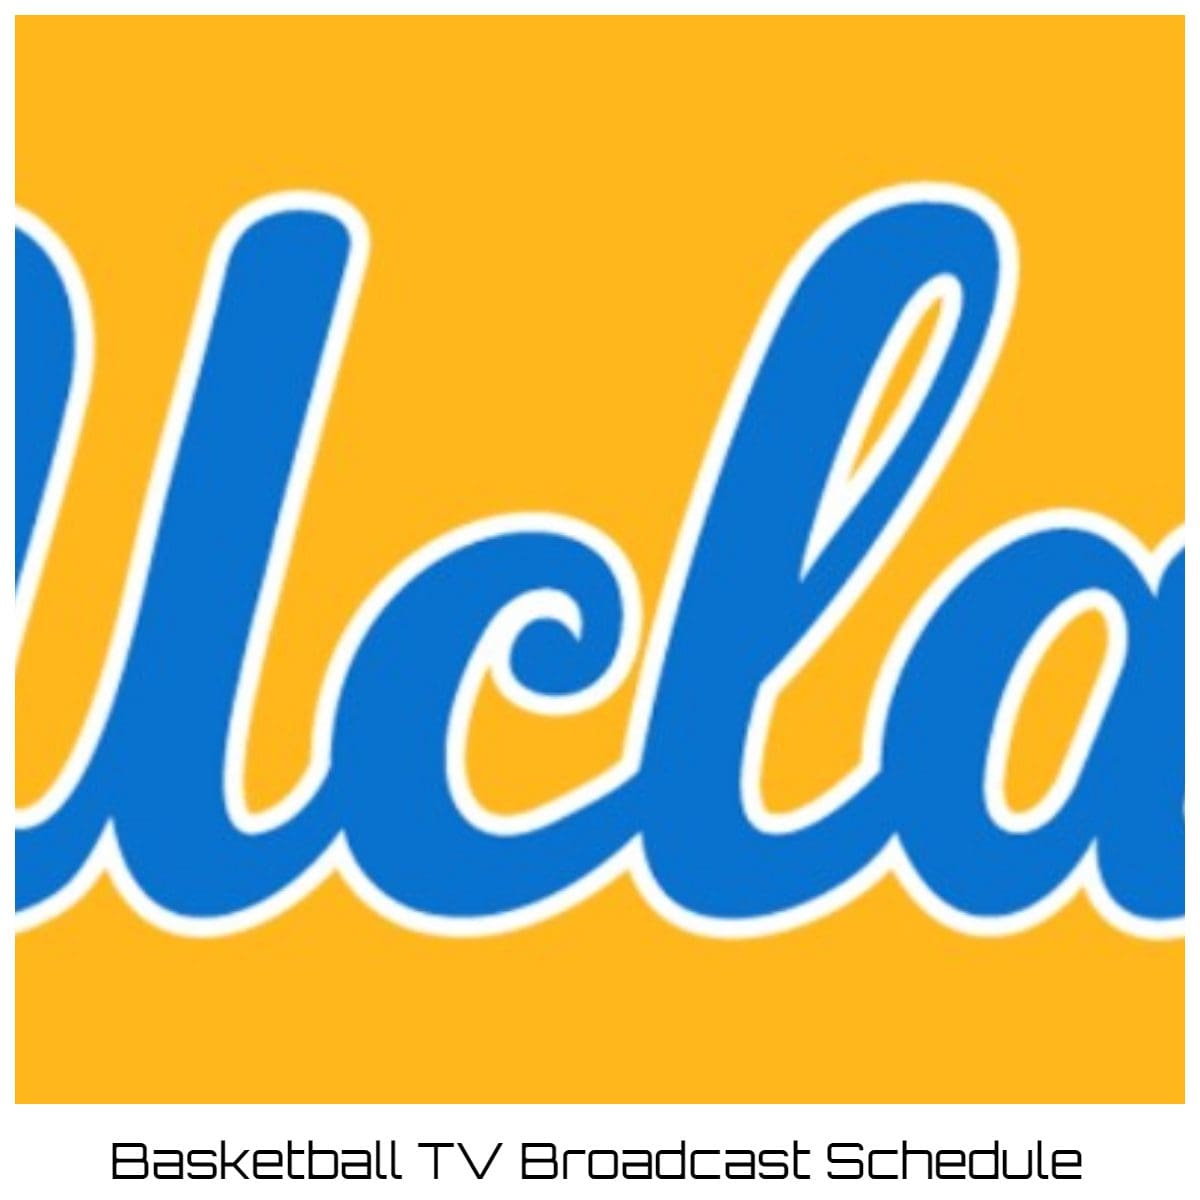 UCLA Bruins Basketball TV Broadcast Schedule